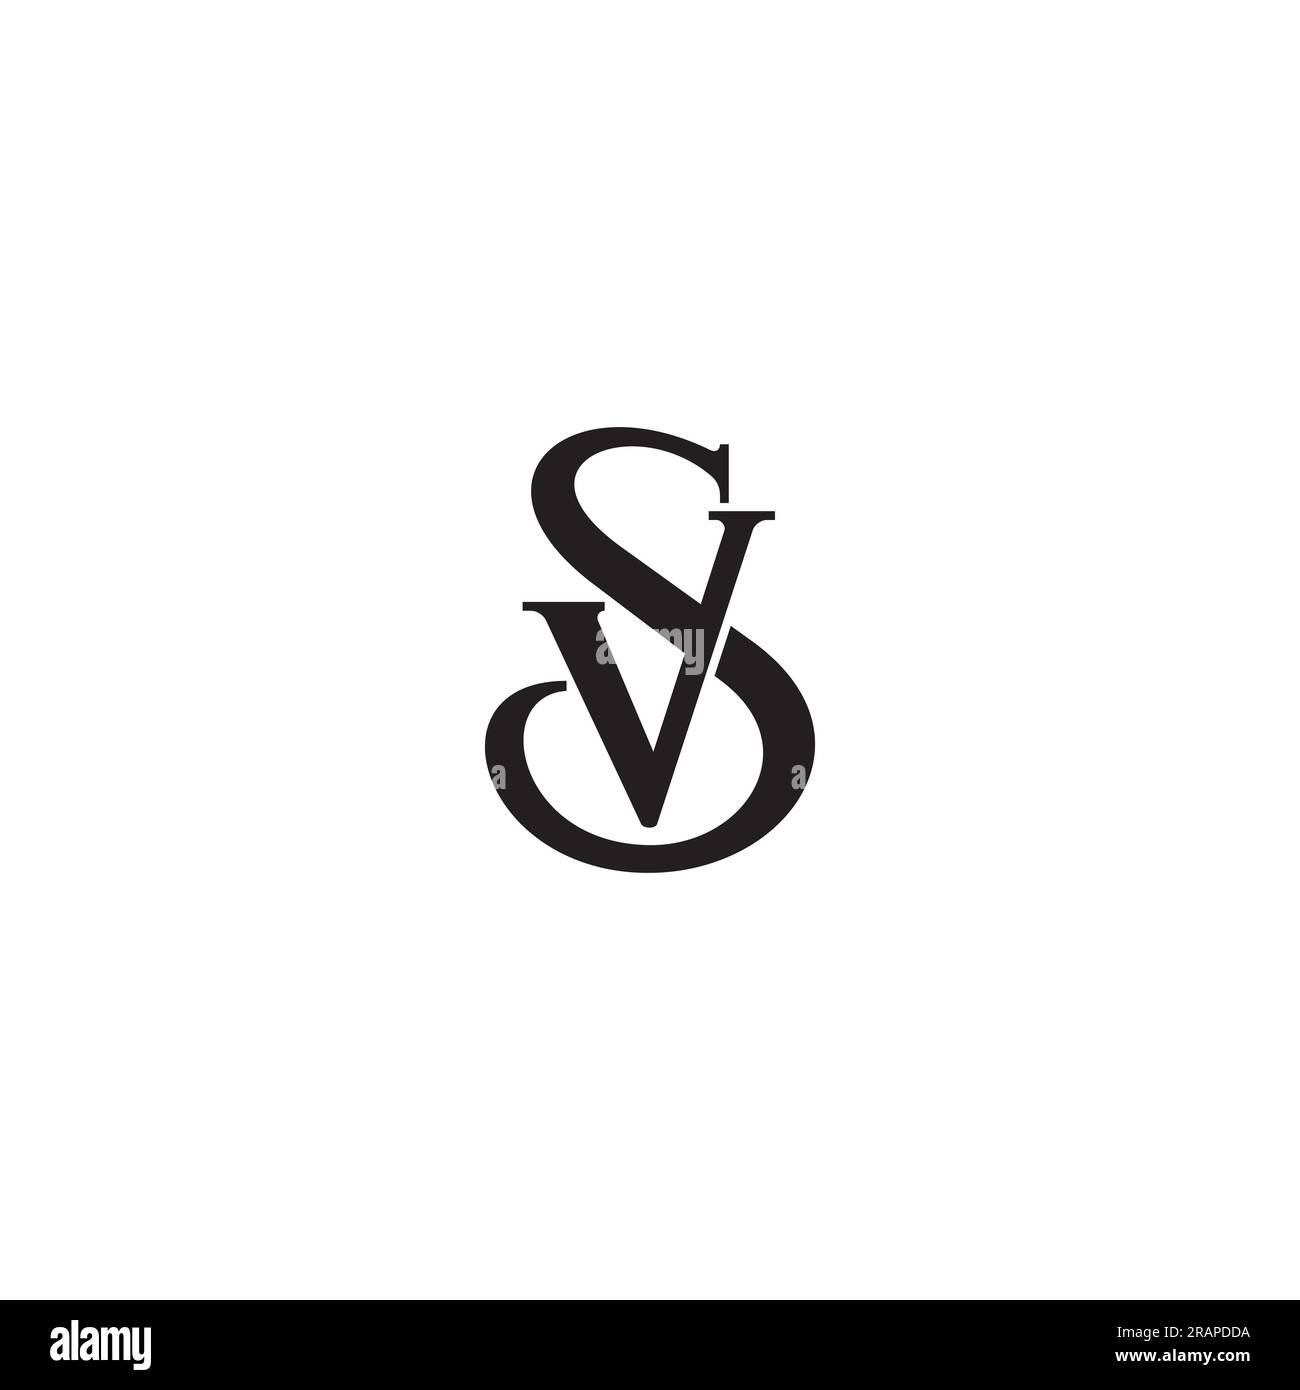 Letter SV logo or icon design Stock Vector Image & Art - Alamy